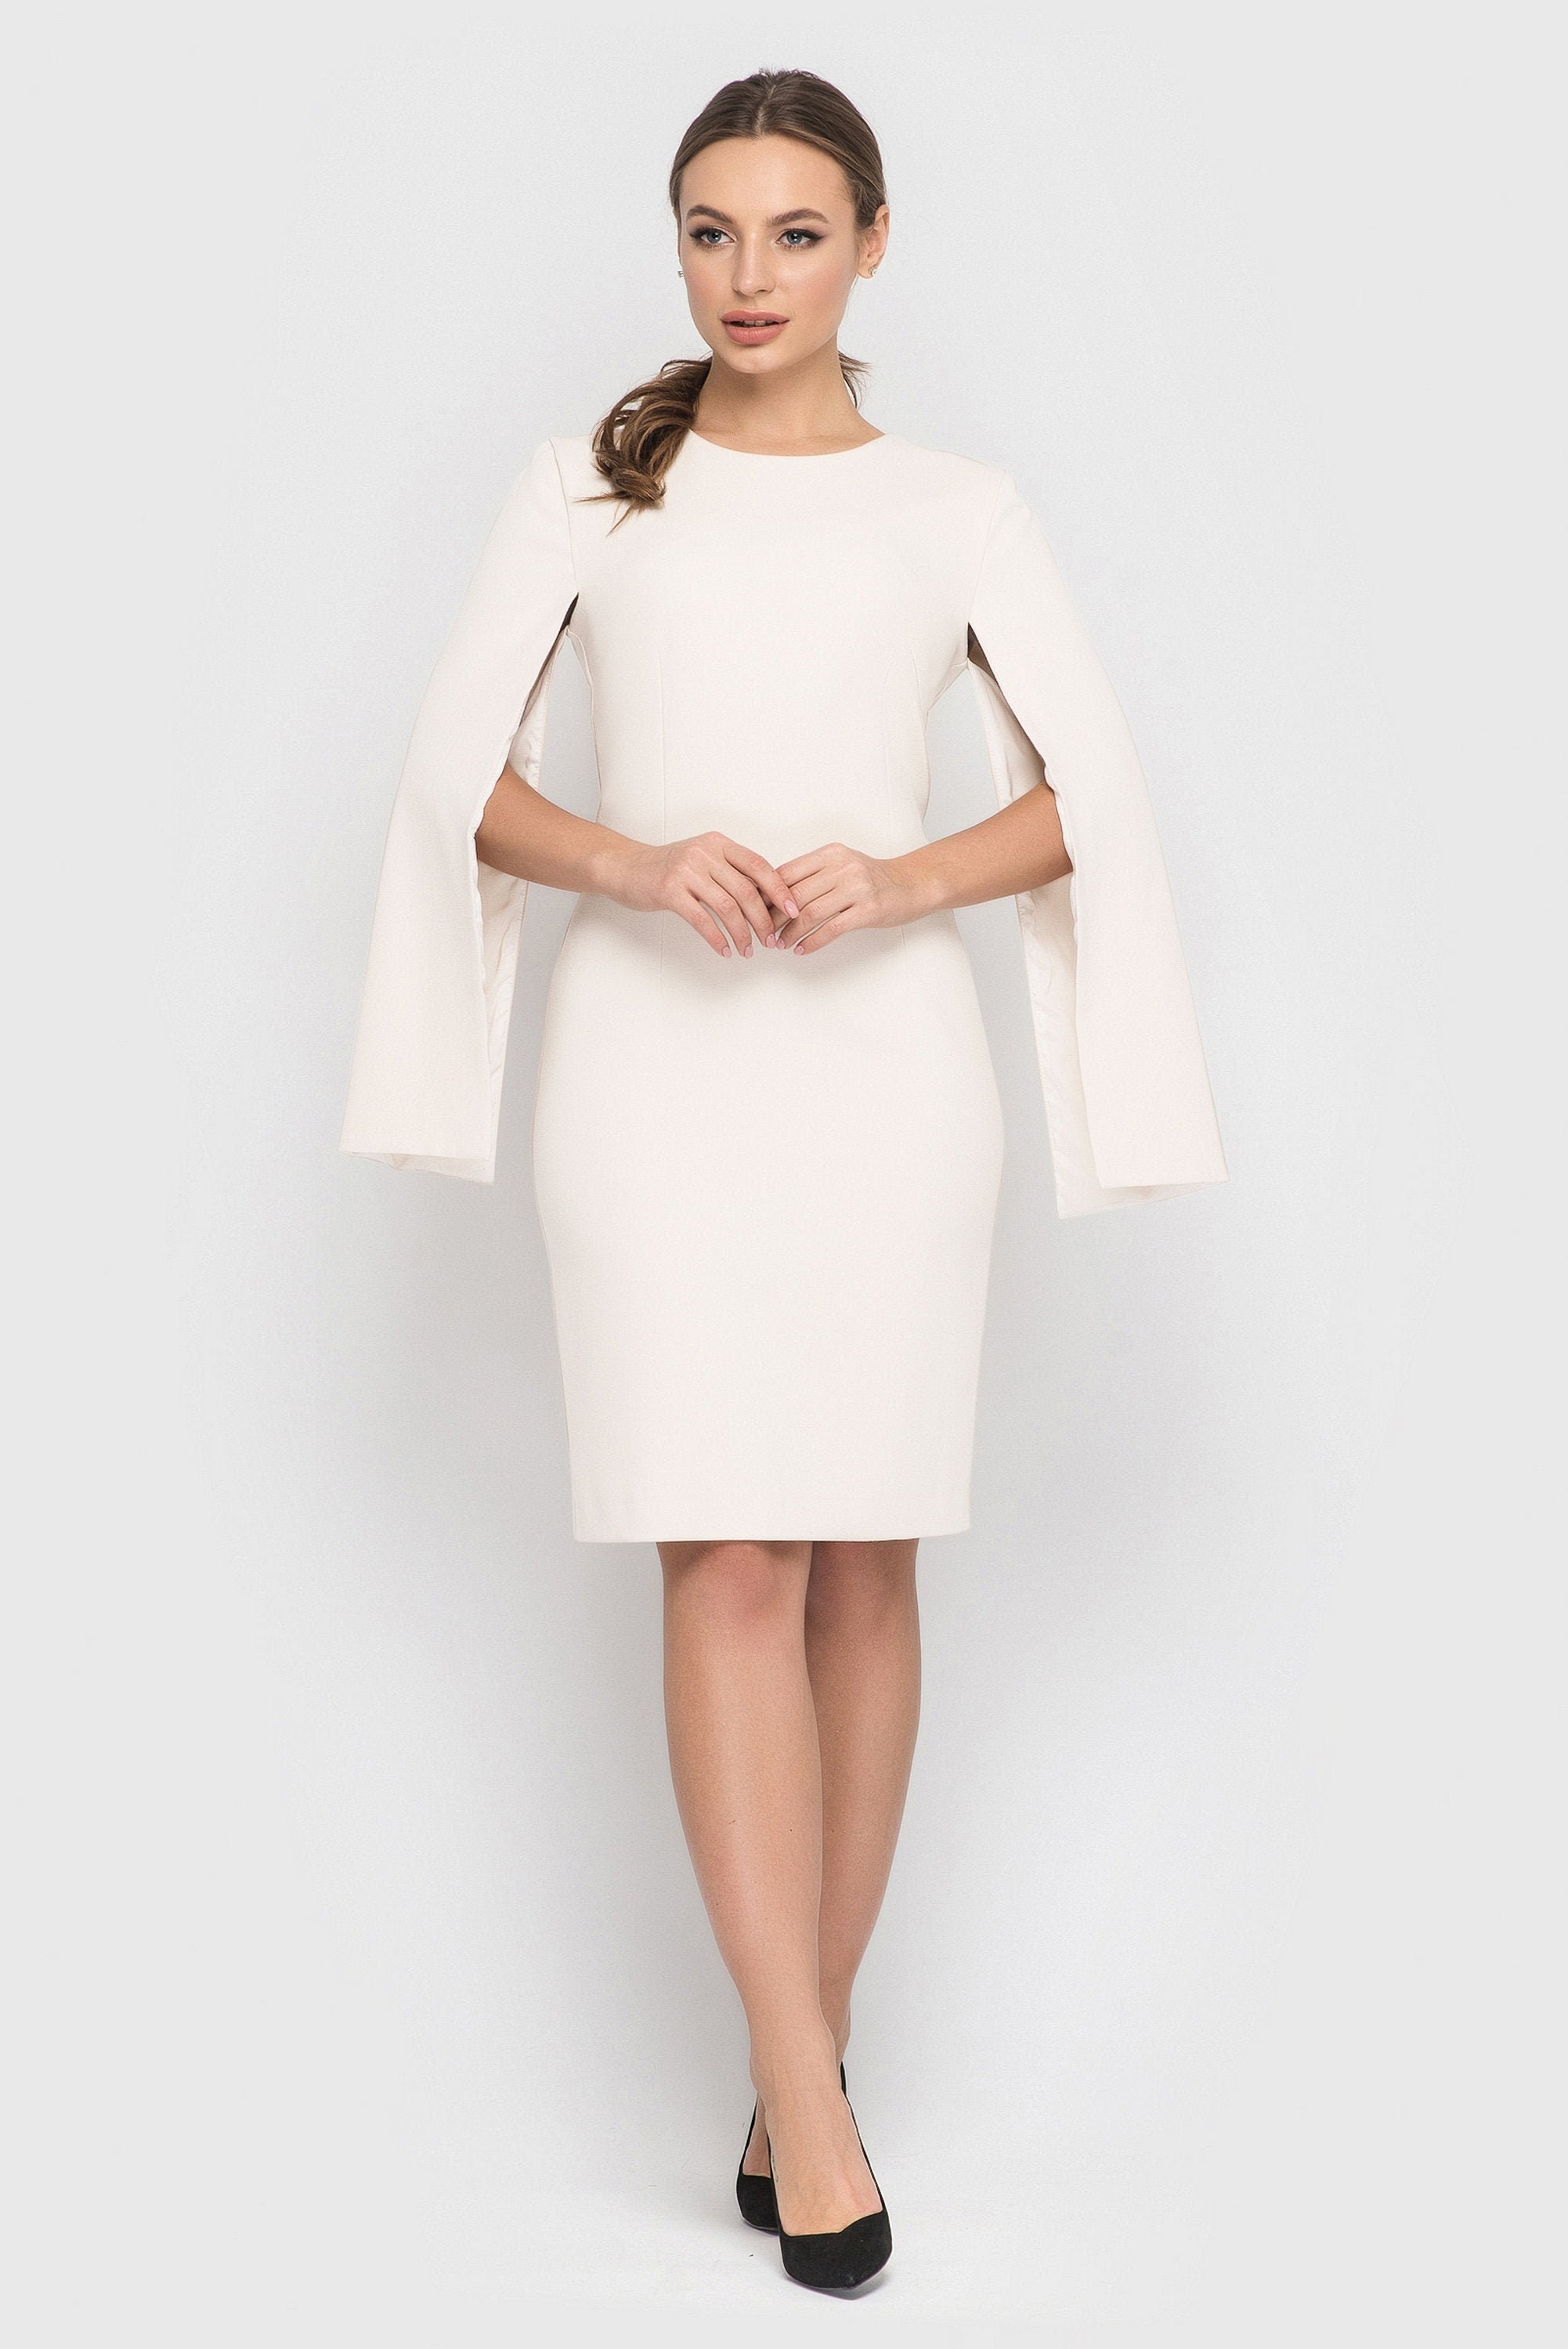 White Cape Sleeve Dress Minimalist ...